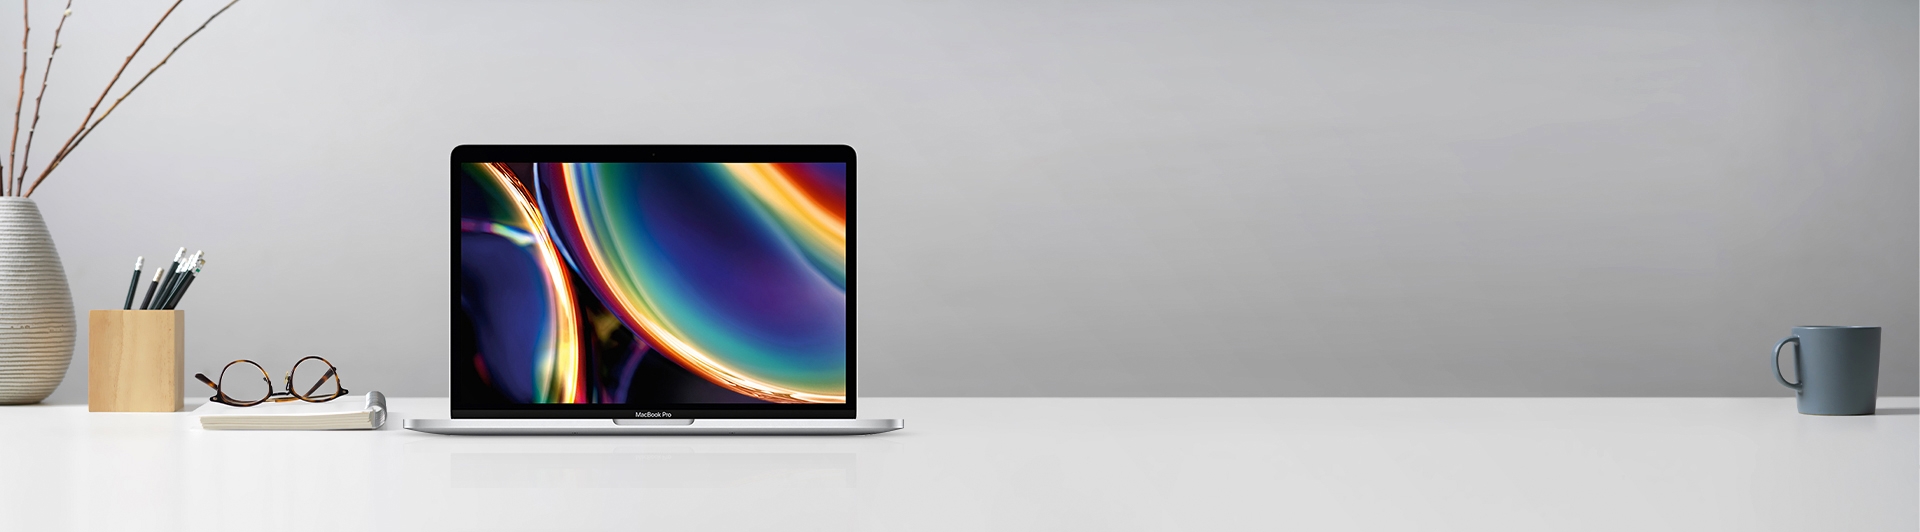 Apple Macbook Pro i7 16 inch MVVJ2SA/A 2019